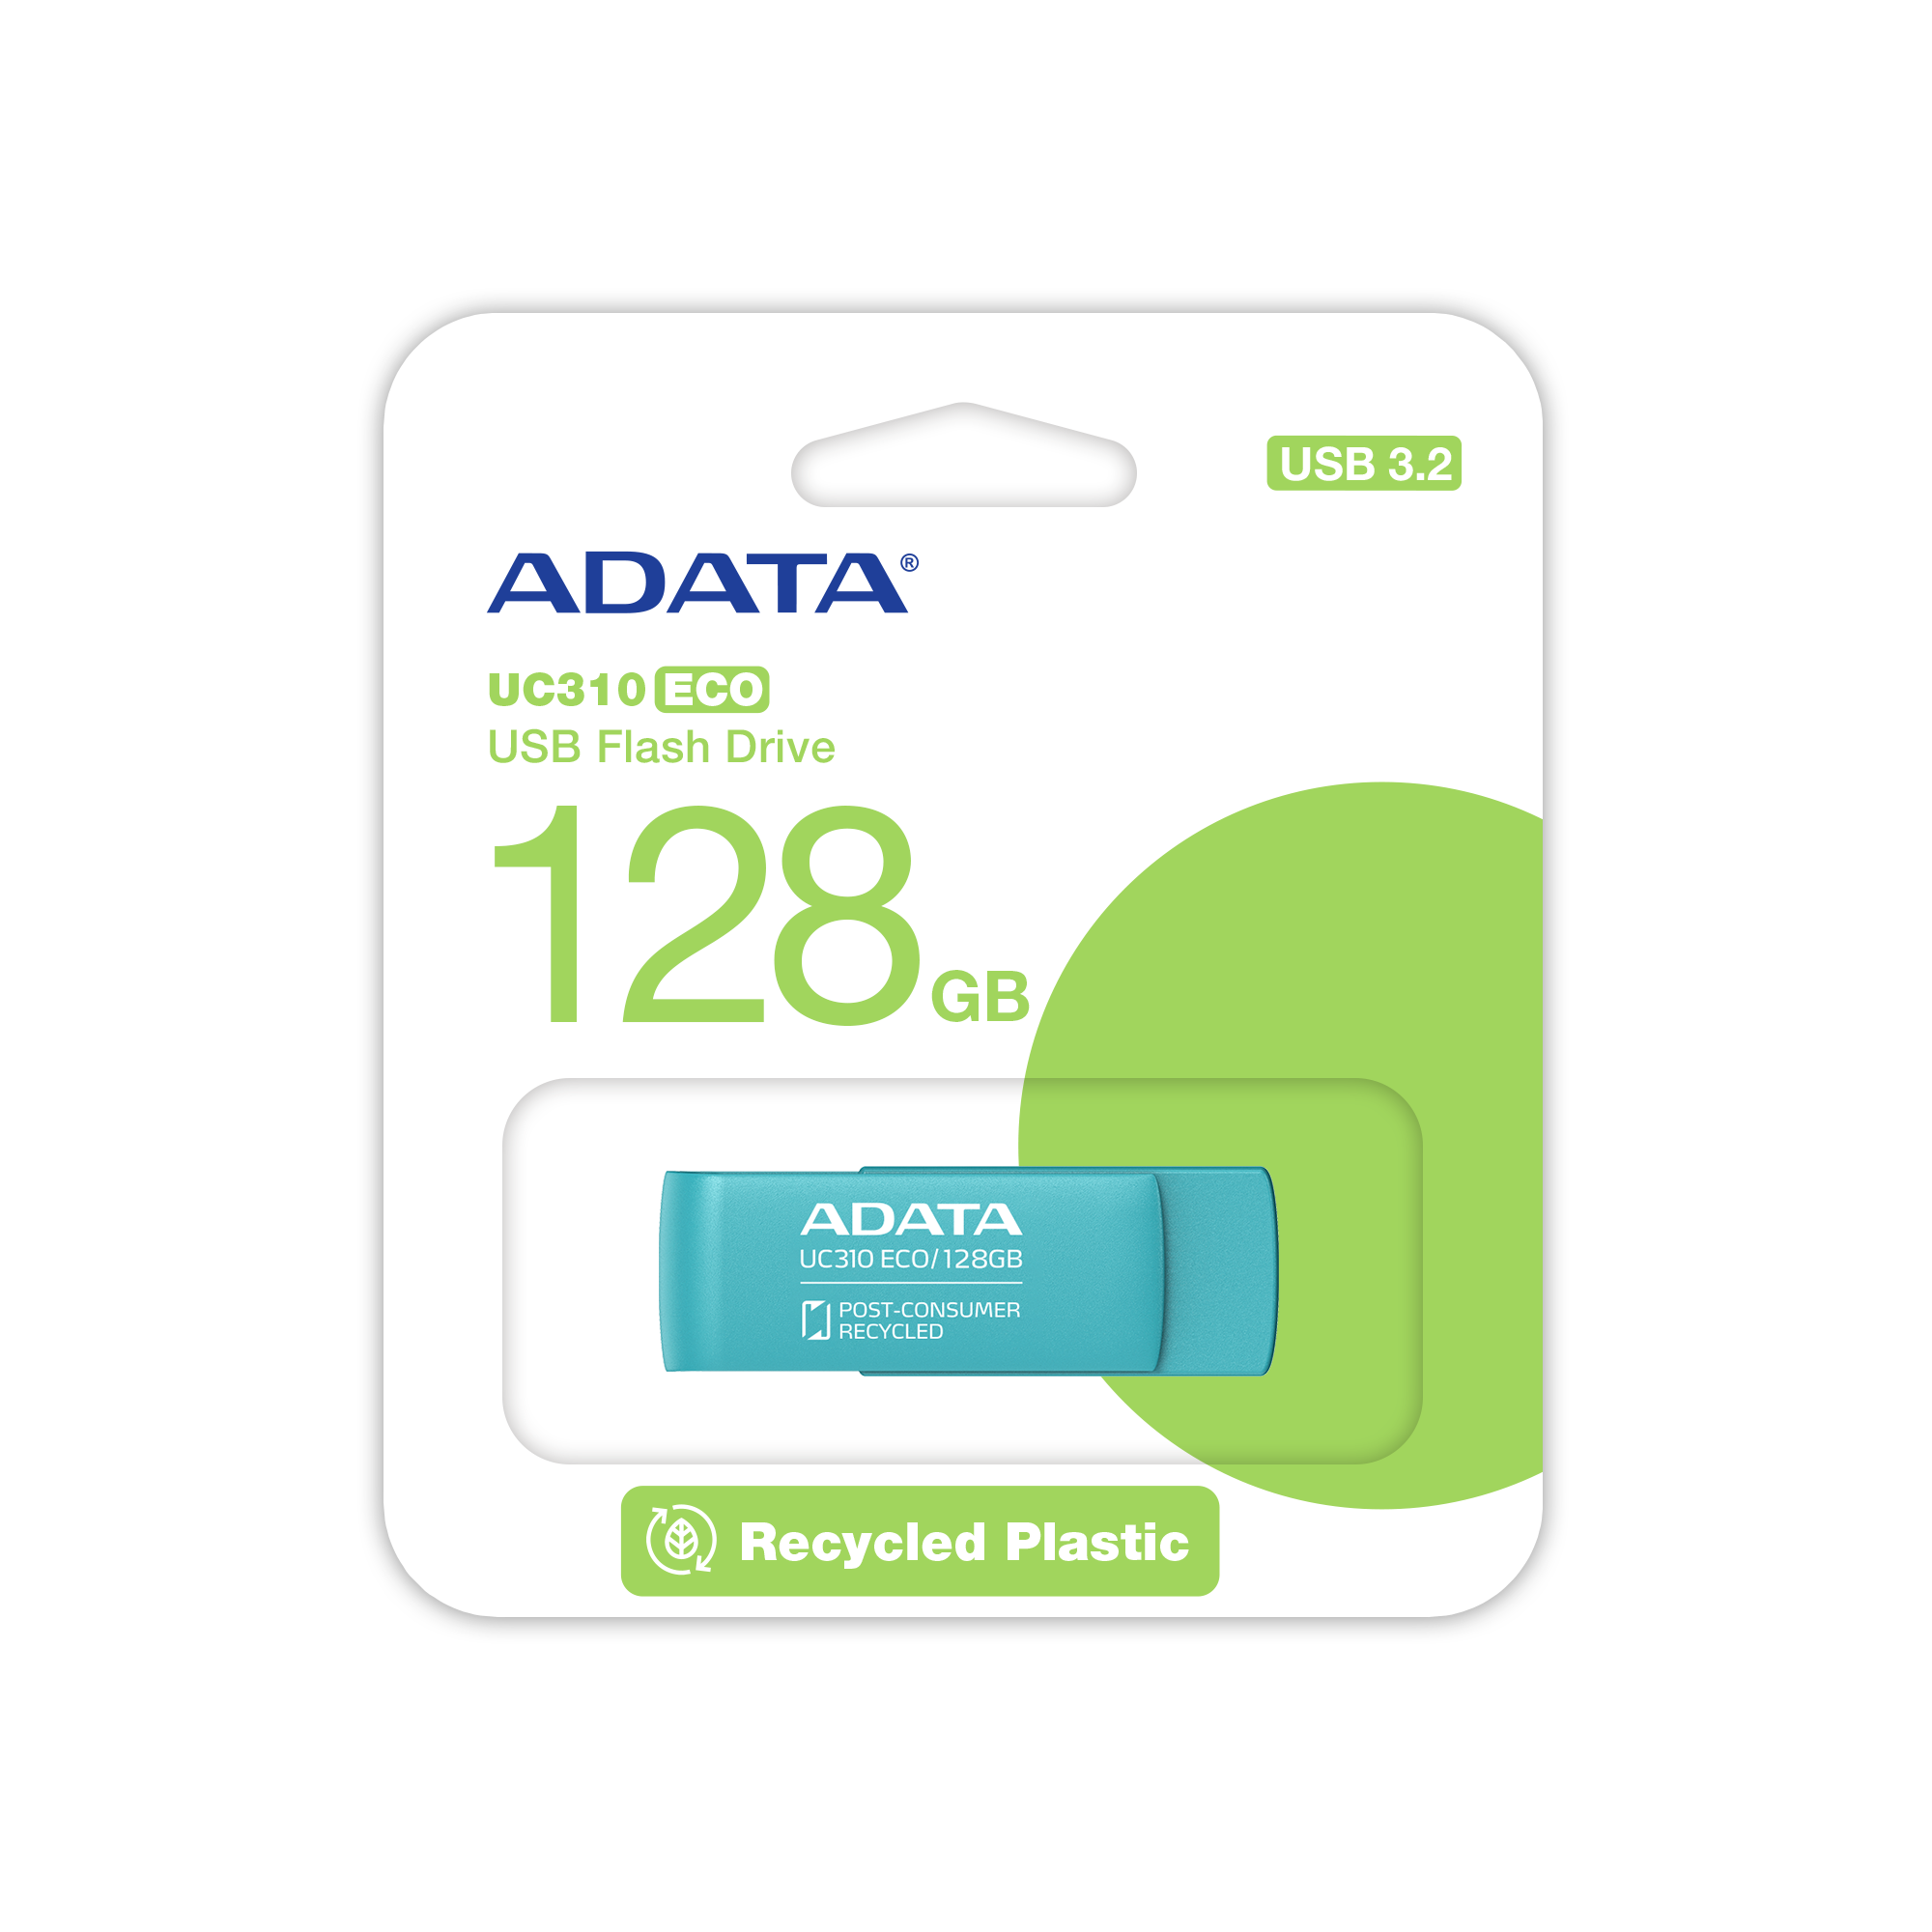 ADATA UC310 ECO Pendrive (128GB USB 3.2 | Capless Swivel Design)